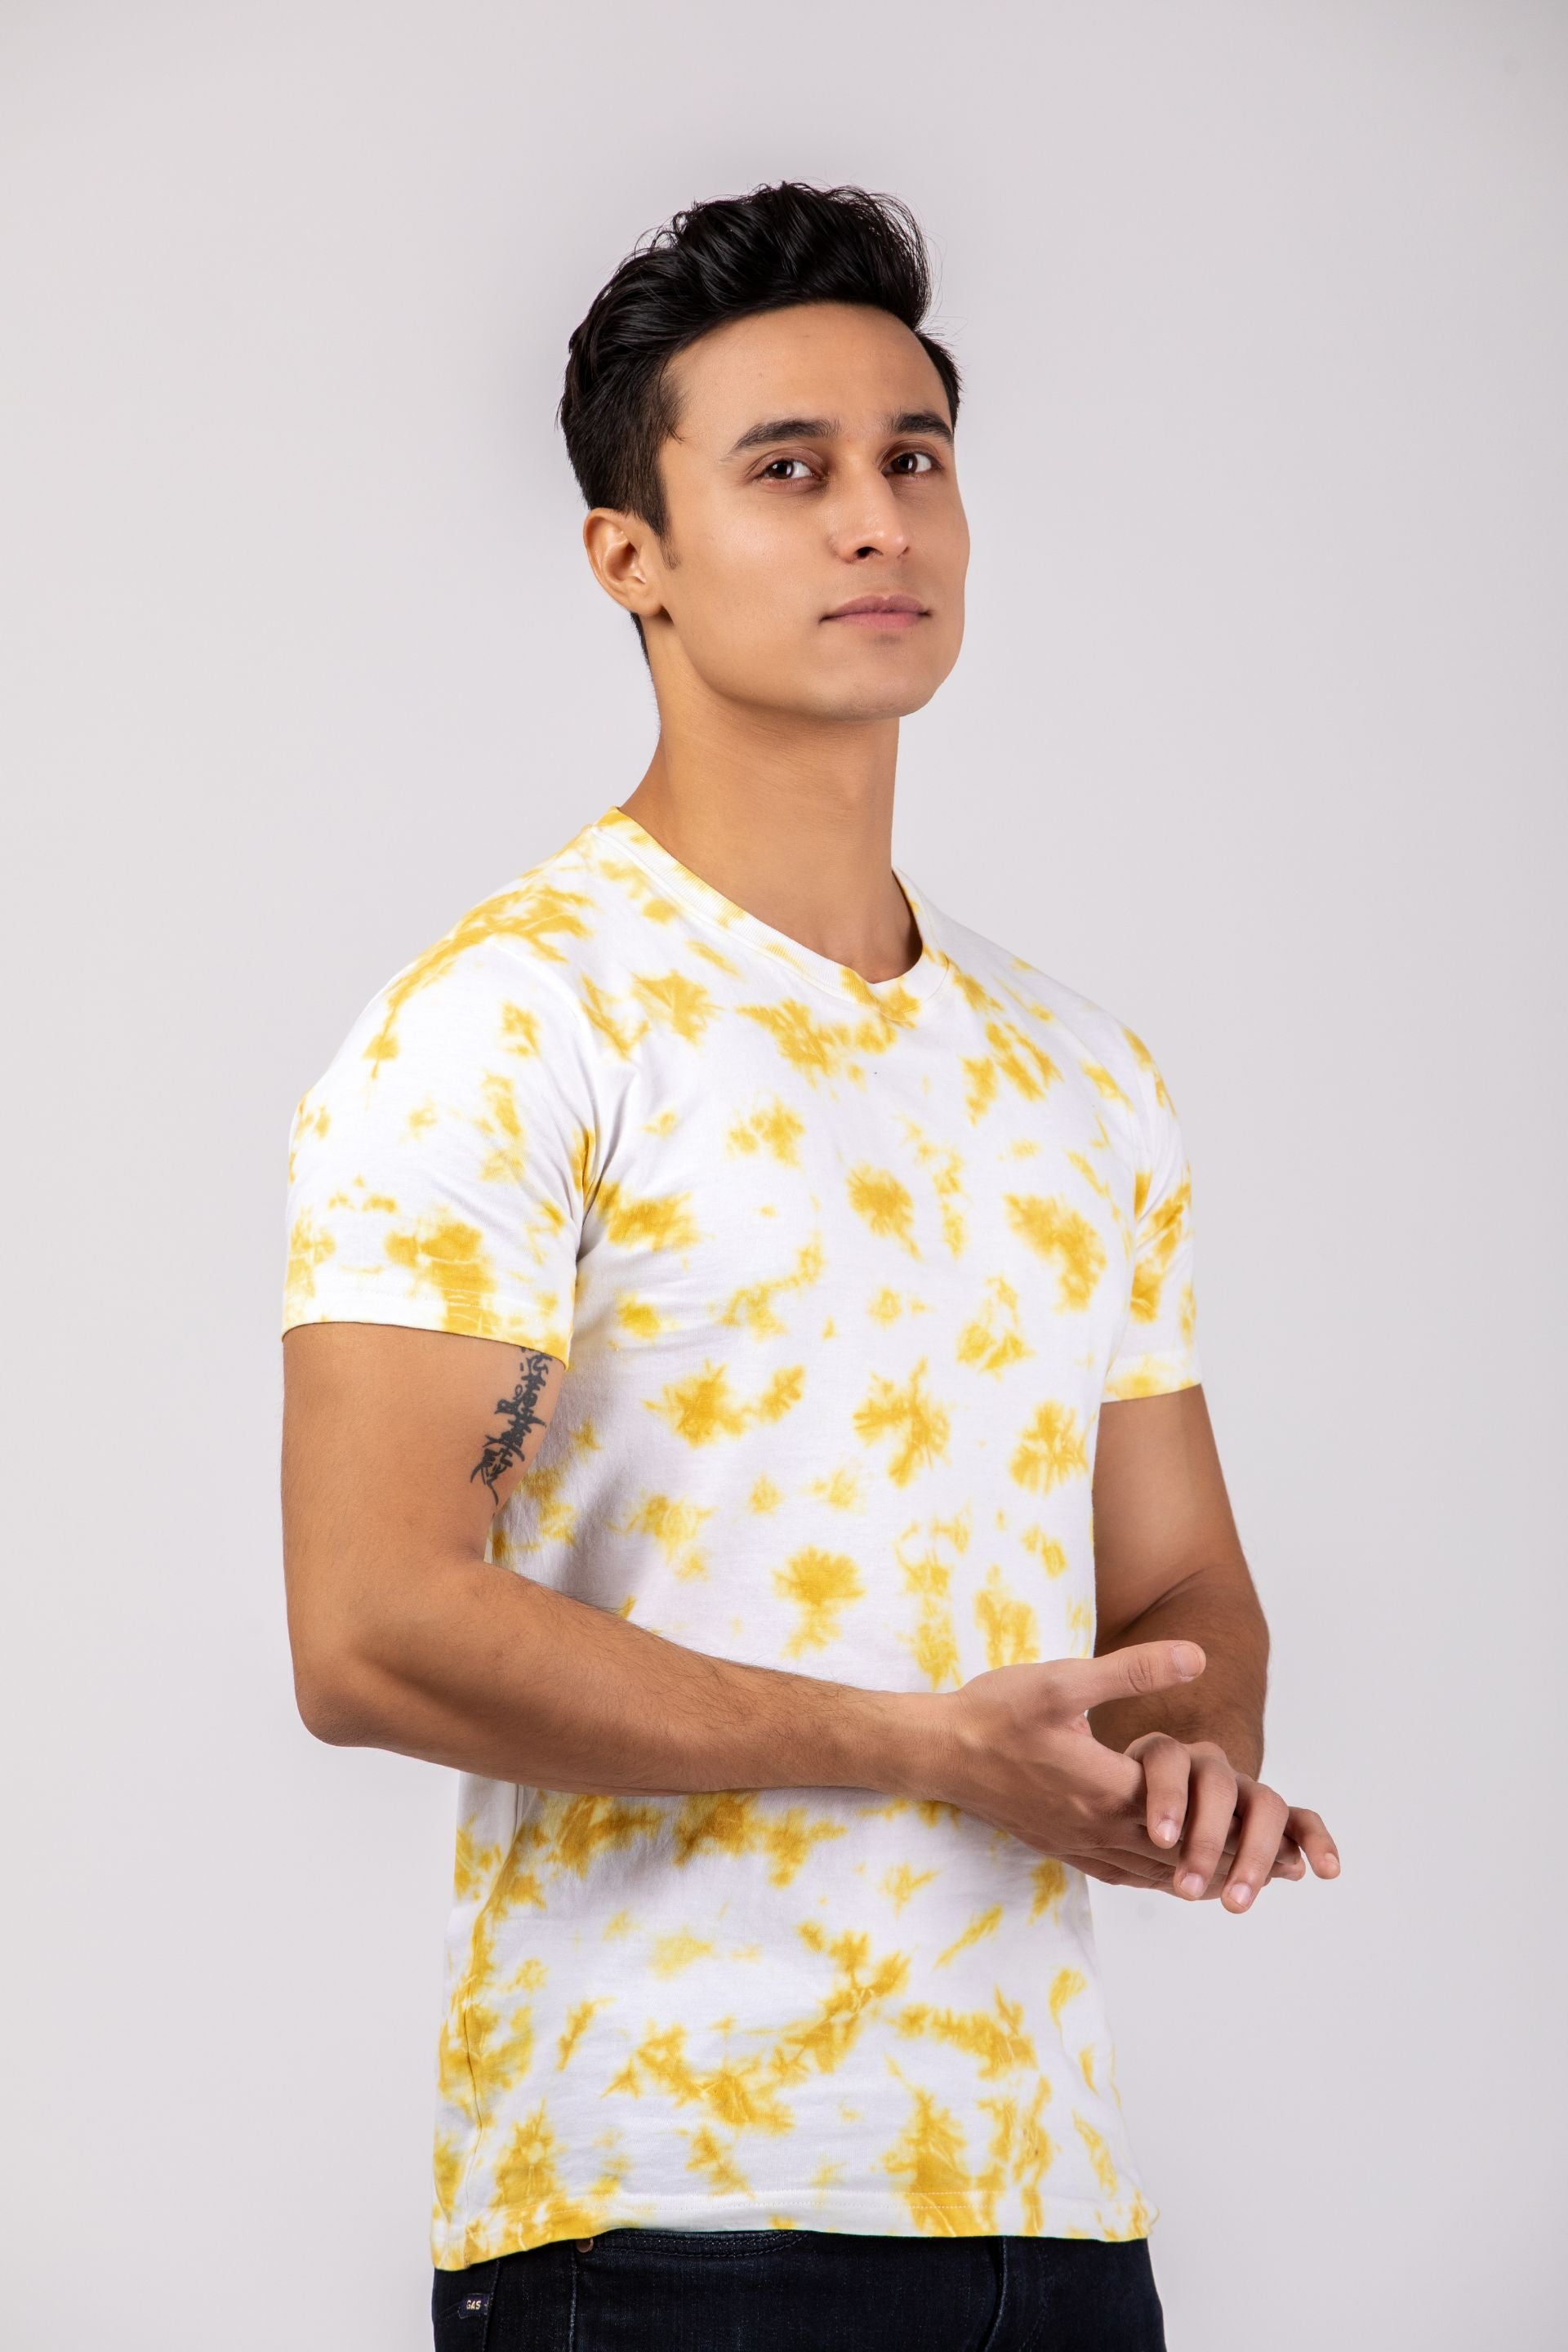 Firangi Yarn Handmade Cotton Tie-Dye Canary Colored T-shirt- Yellow